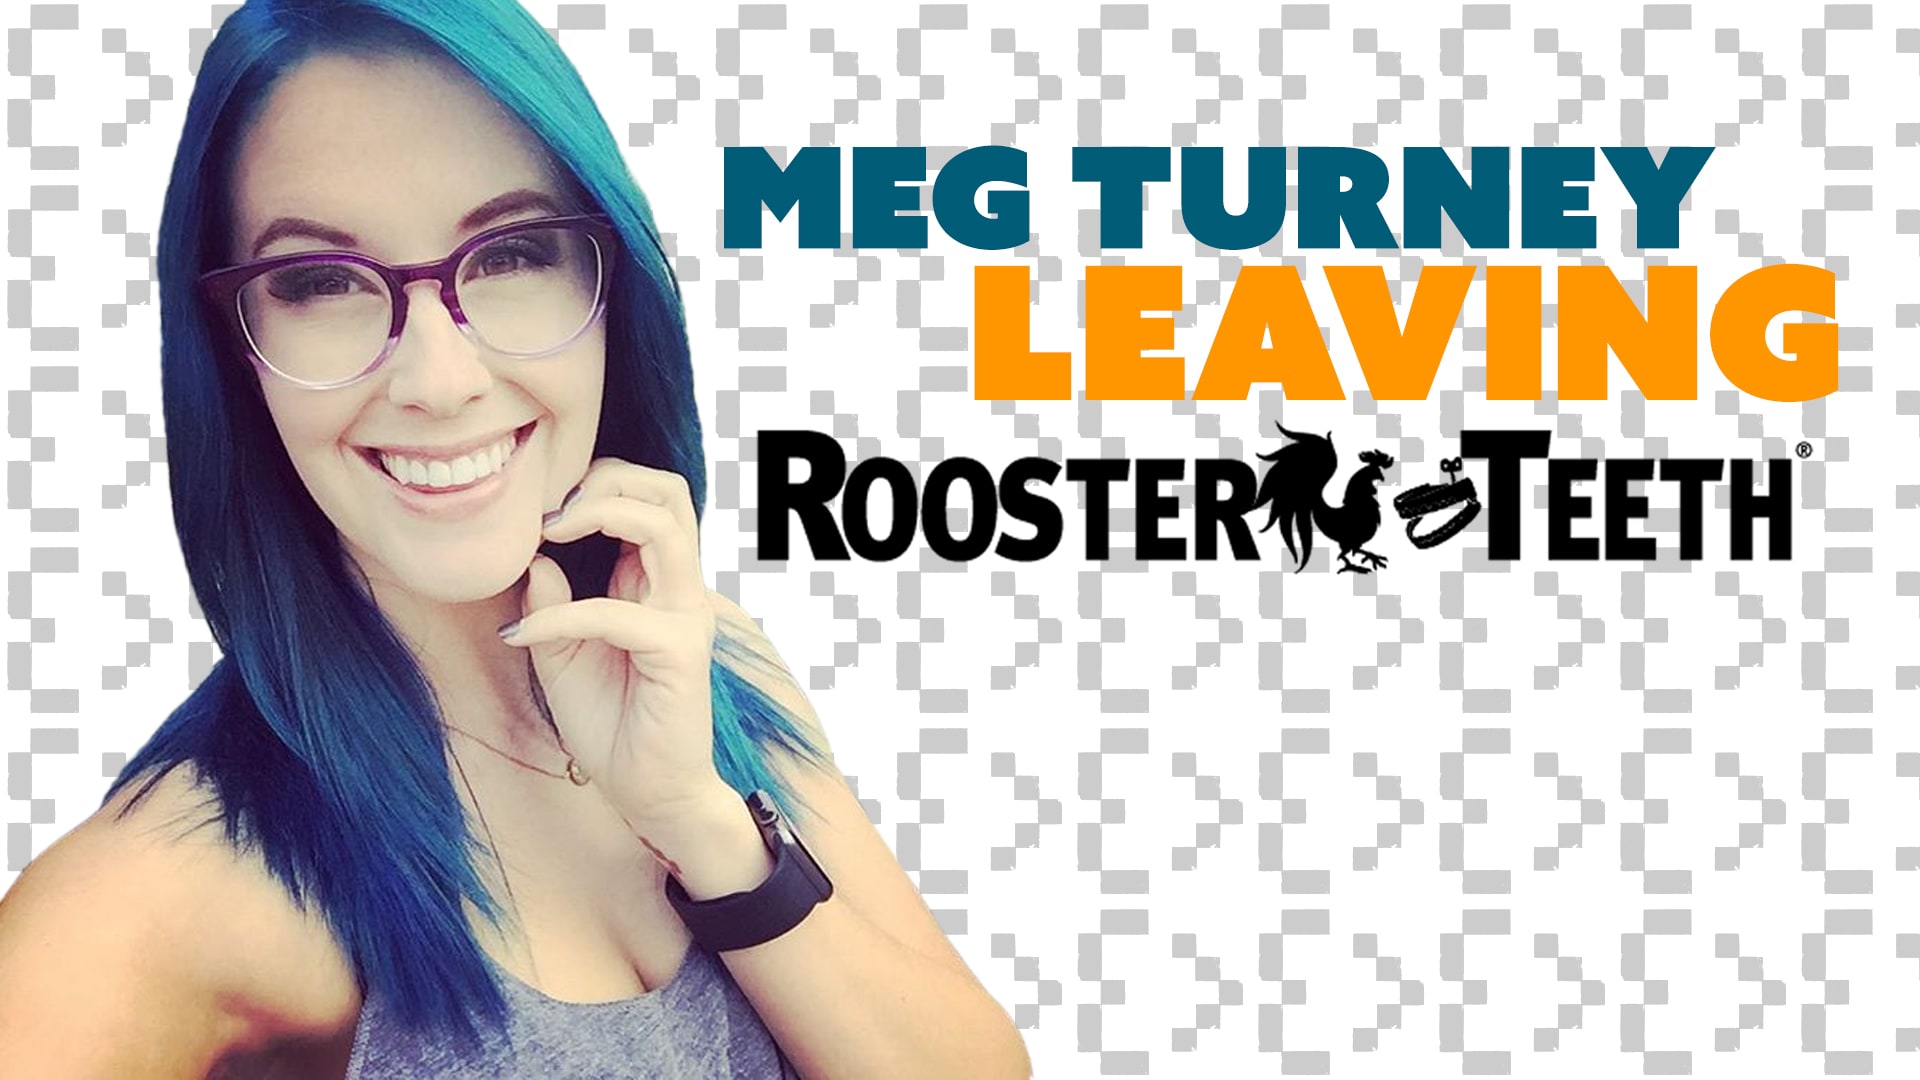 Meg turney rooster teeth